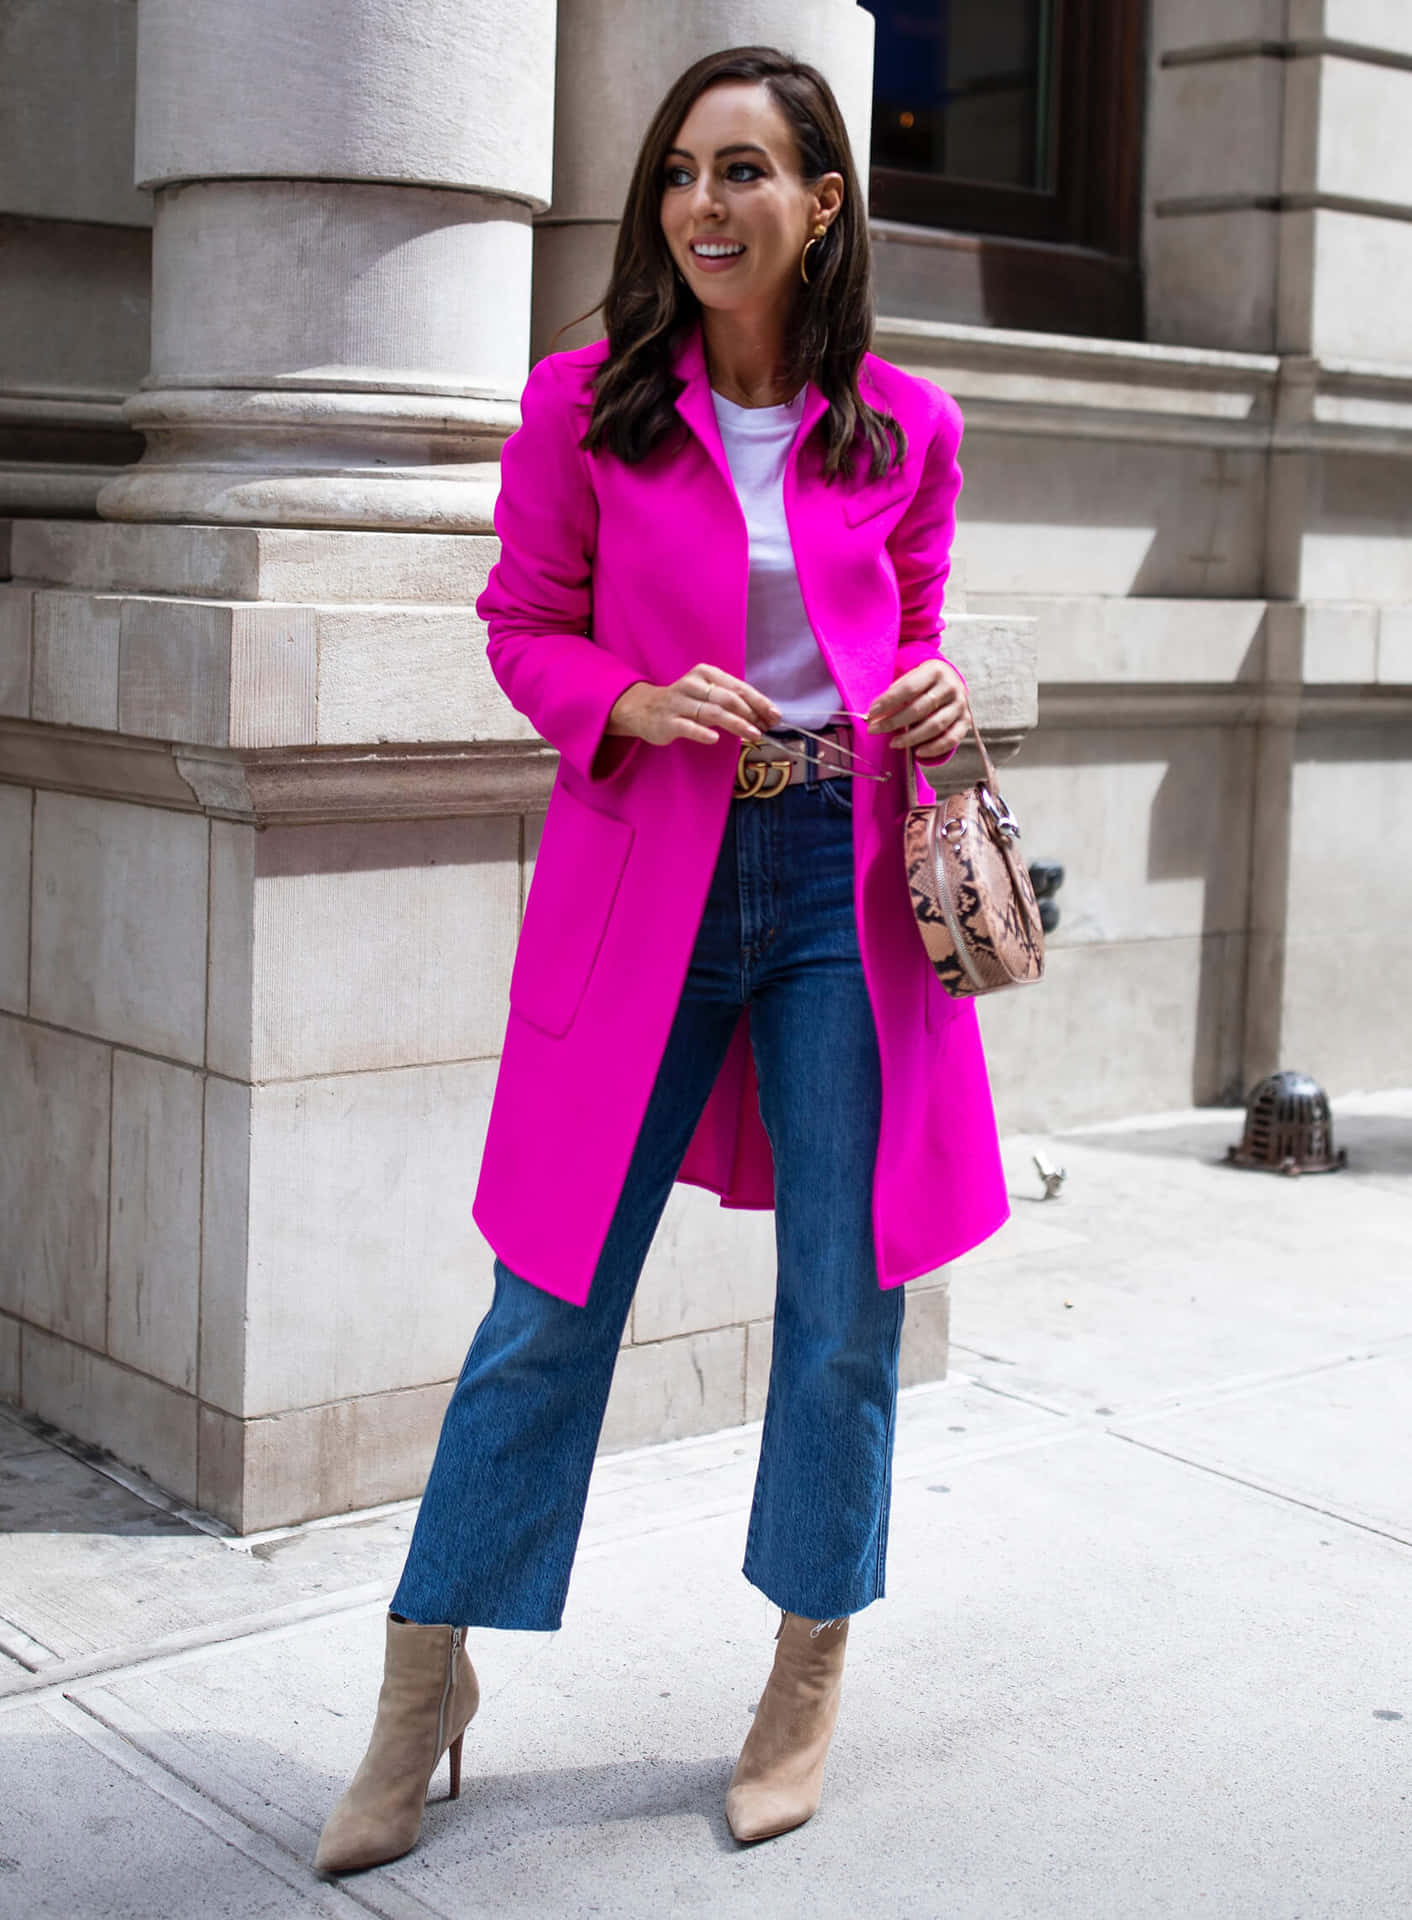 Elegance in Fashion - Woman Wearing a Stylish Pink Coat Wallpaper